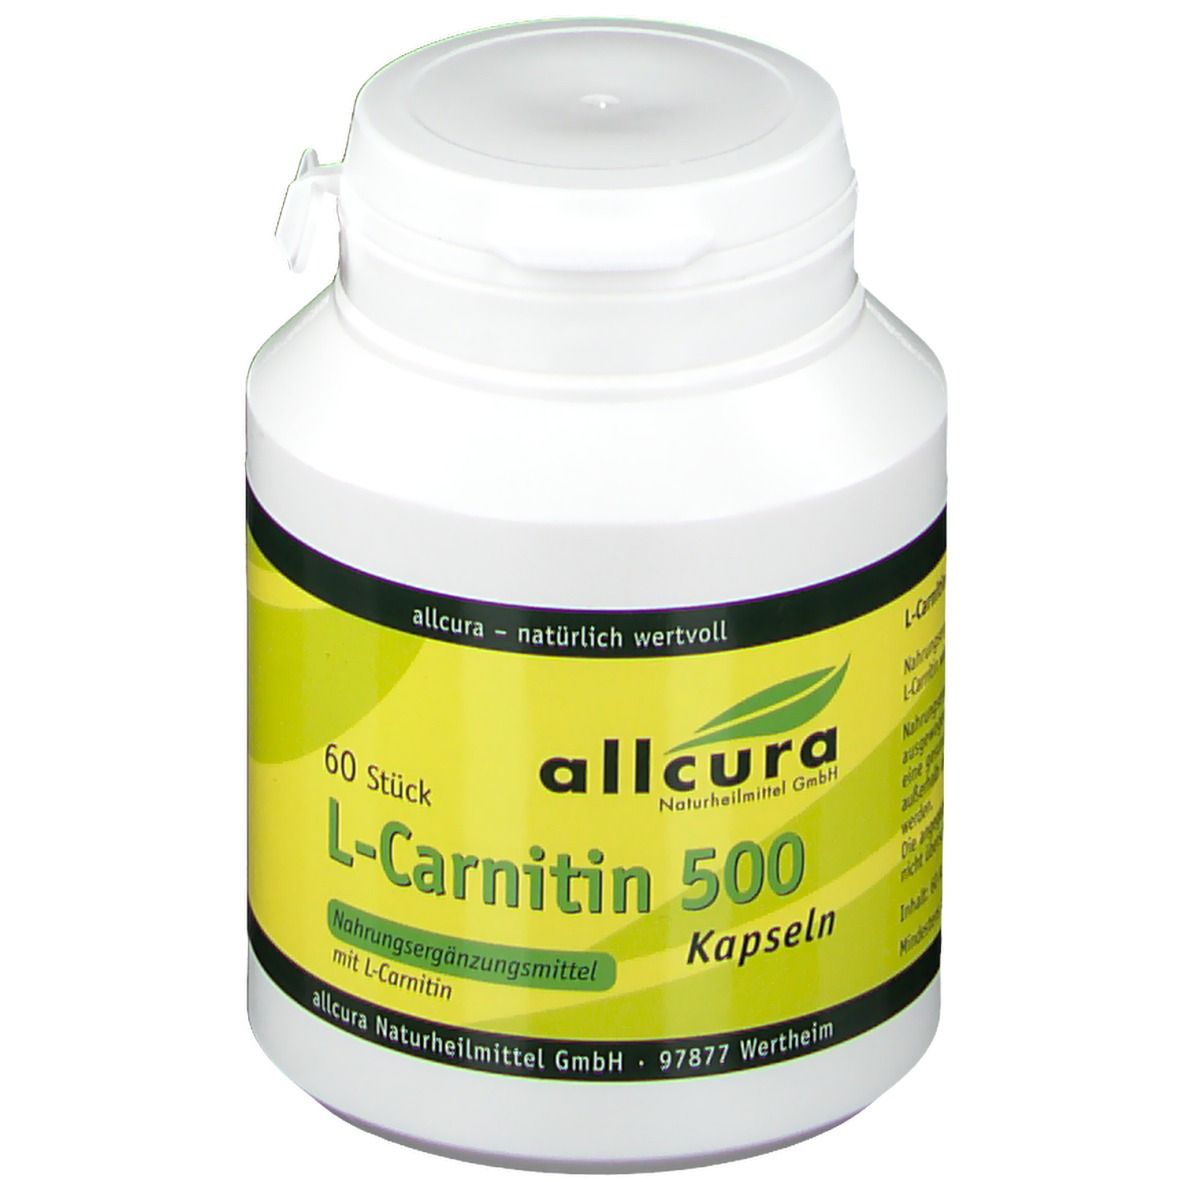 allcura L-Carnitine 500 gélules